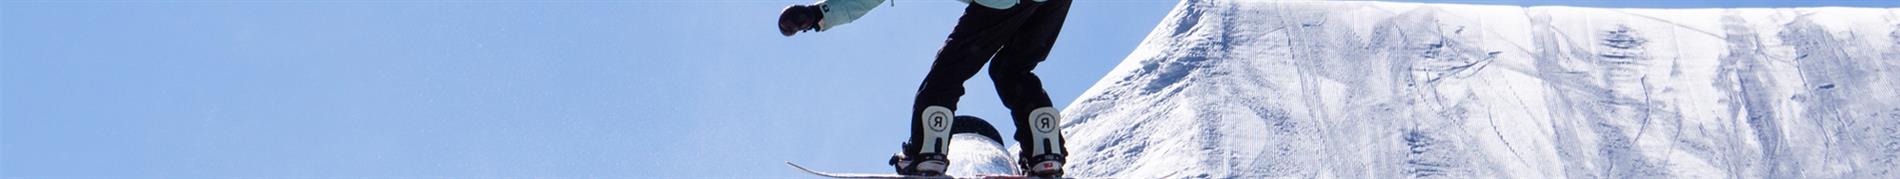 Roxy Women's Snowboard Pants: Warm, Waterproof and Awesome 